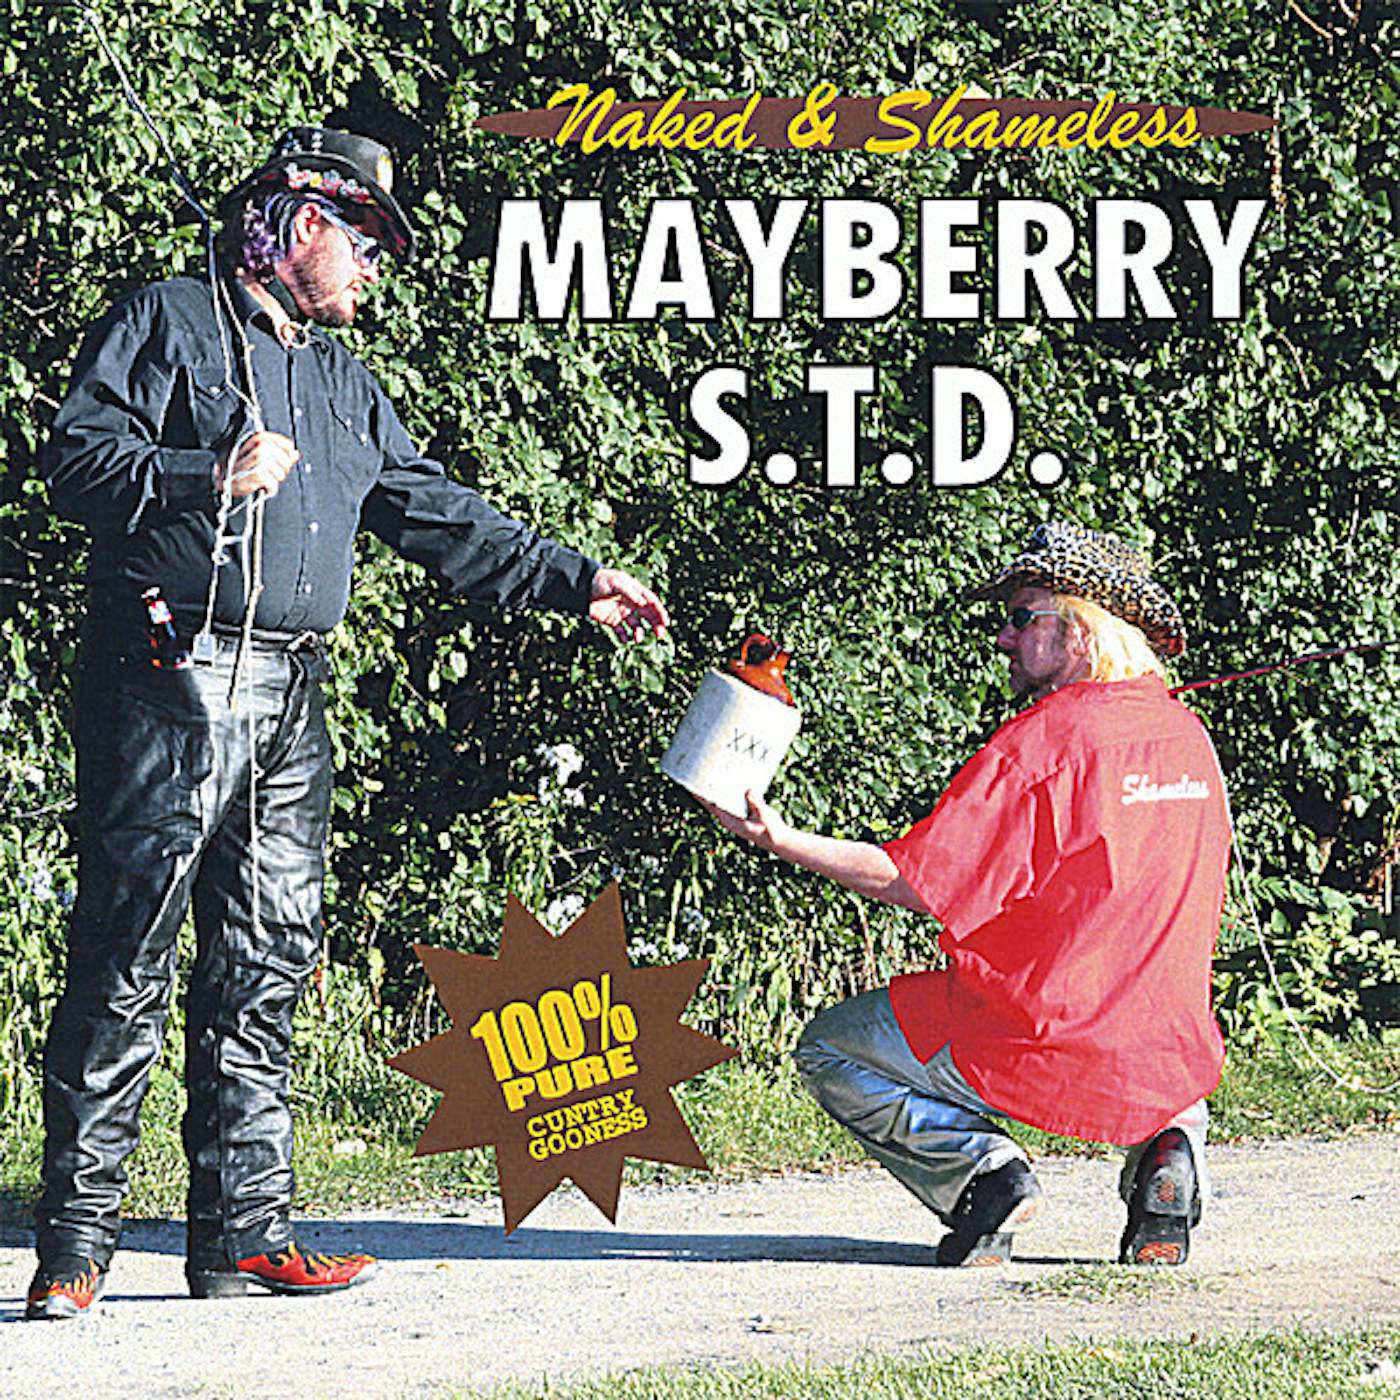 Naked & Shameless MAYBERRY STD CD